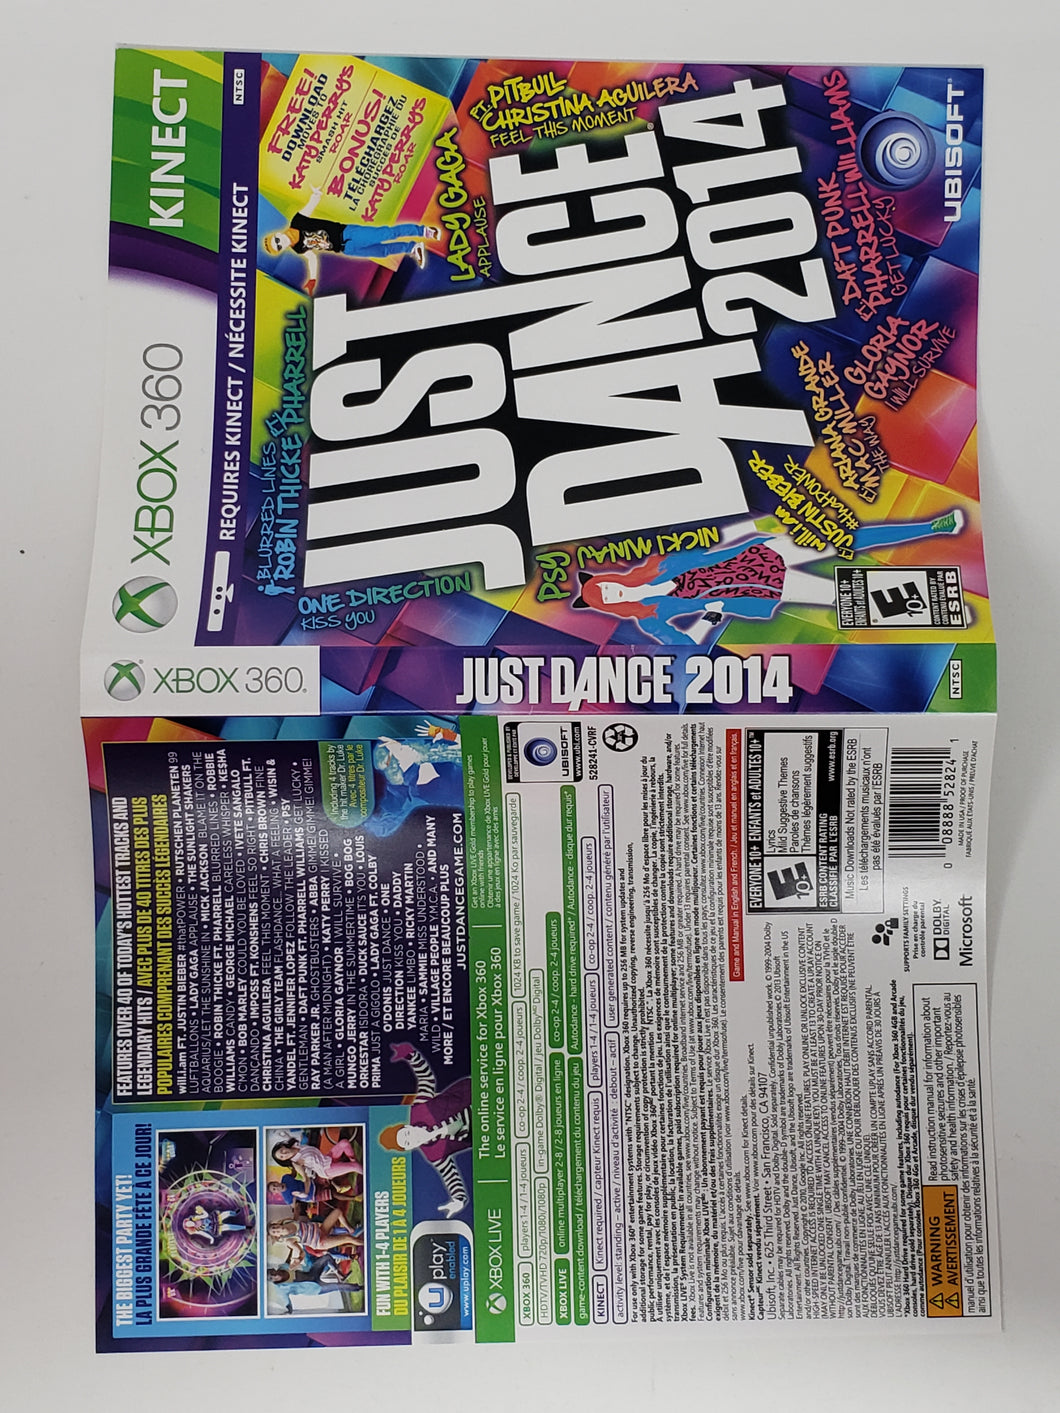 Just Dance 2014 [Couverture] - Microsoft XBOX 360